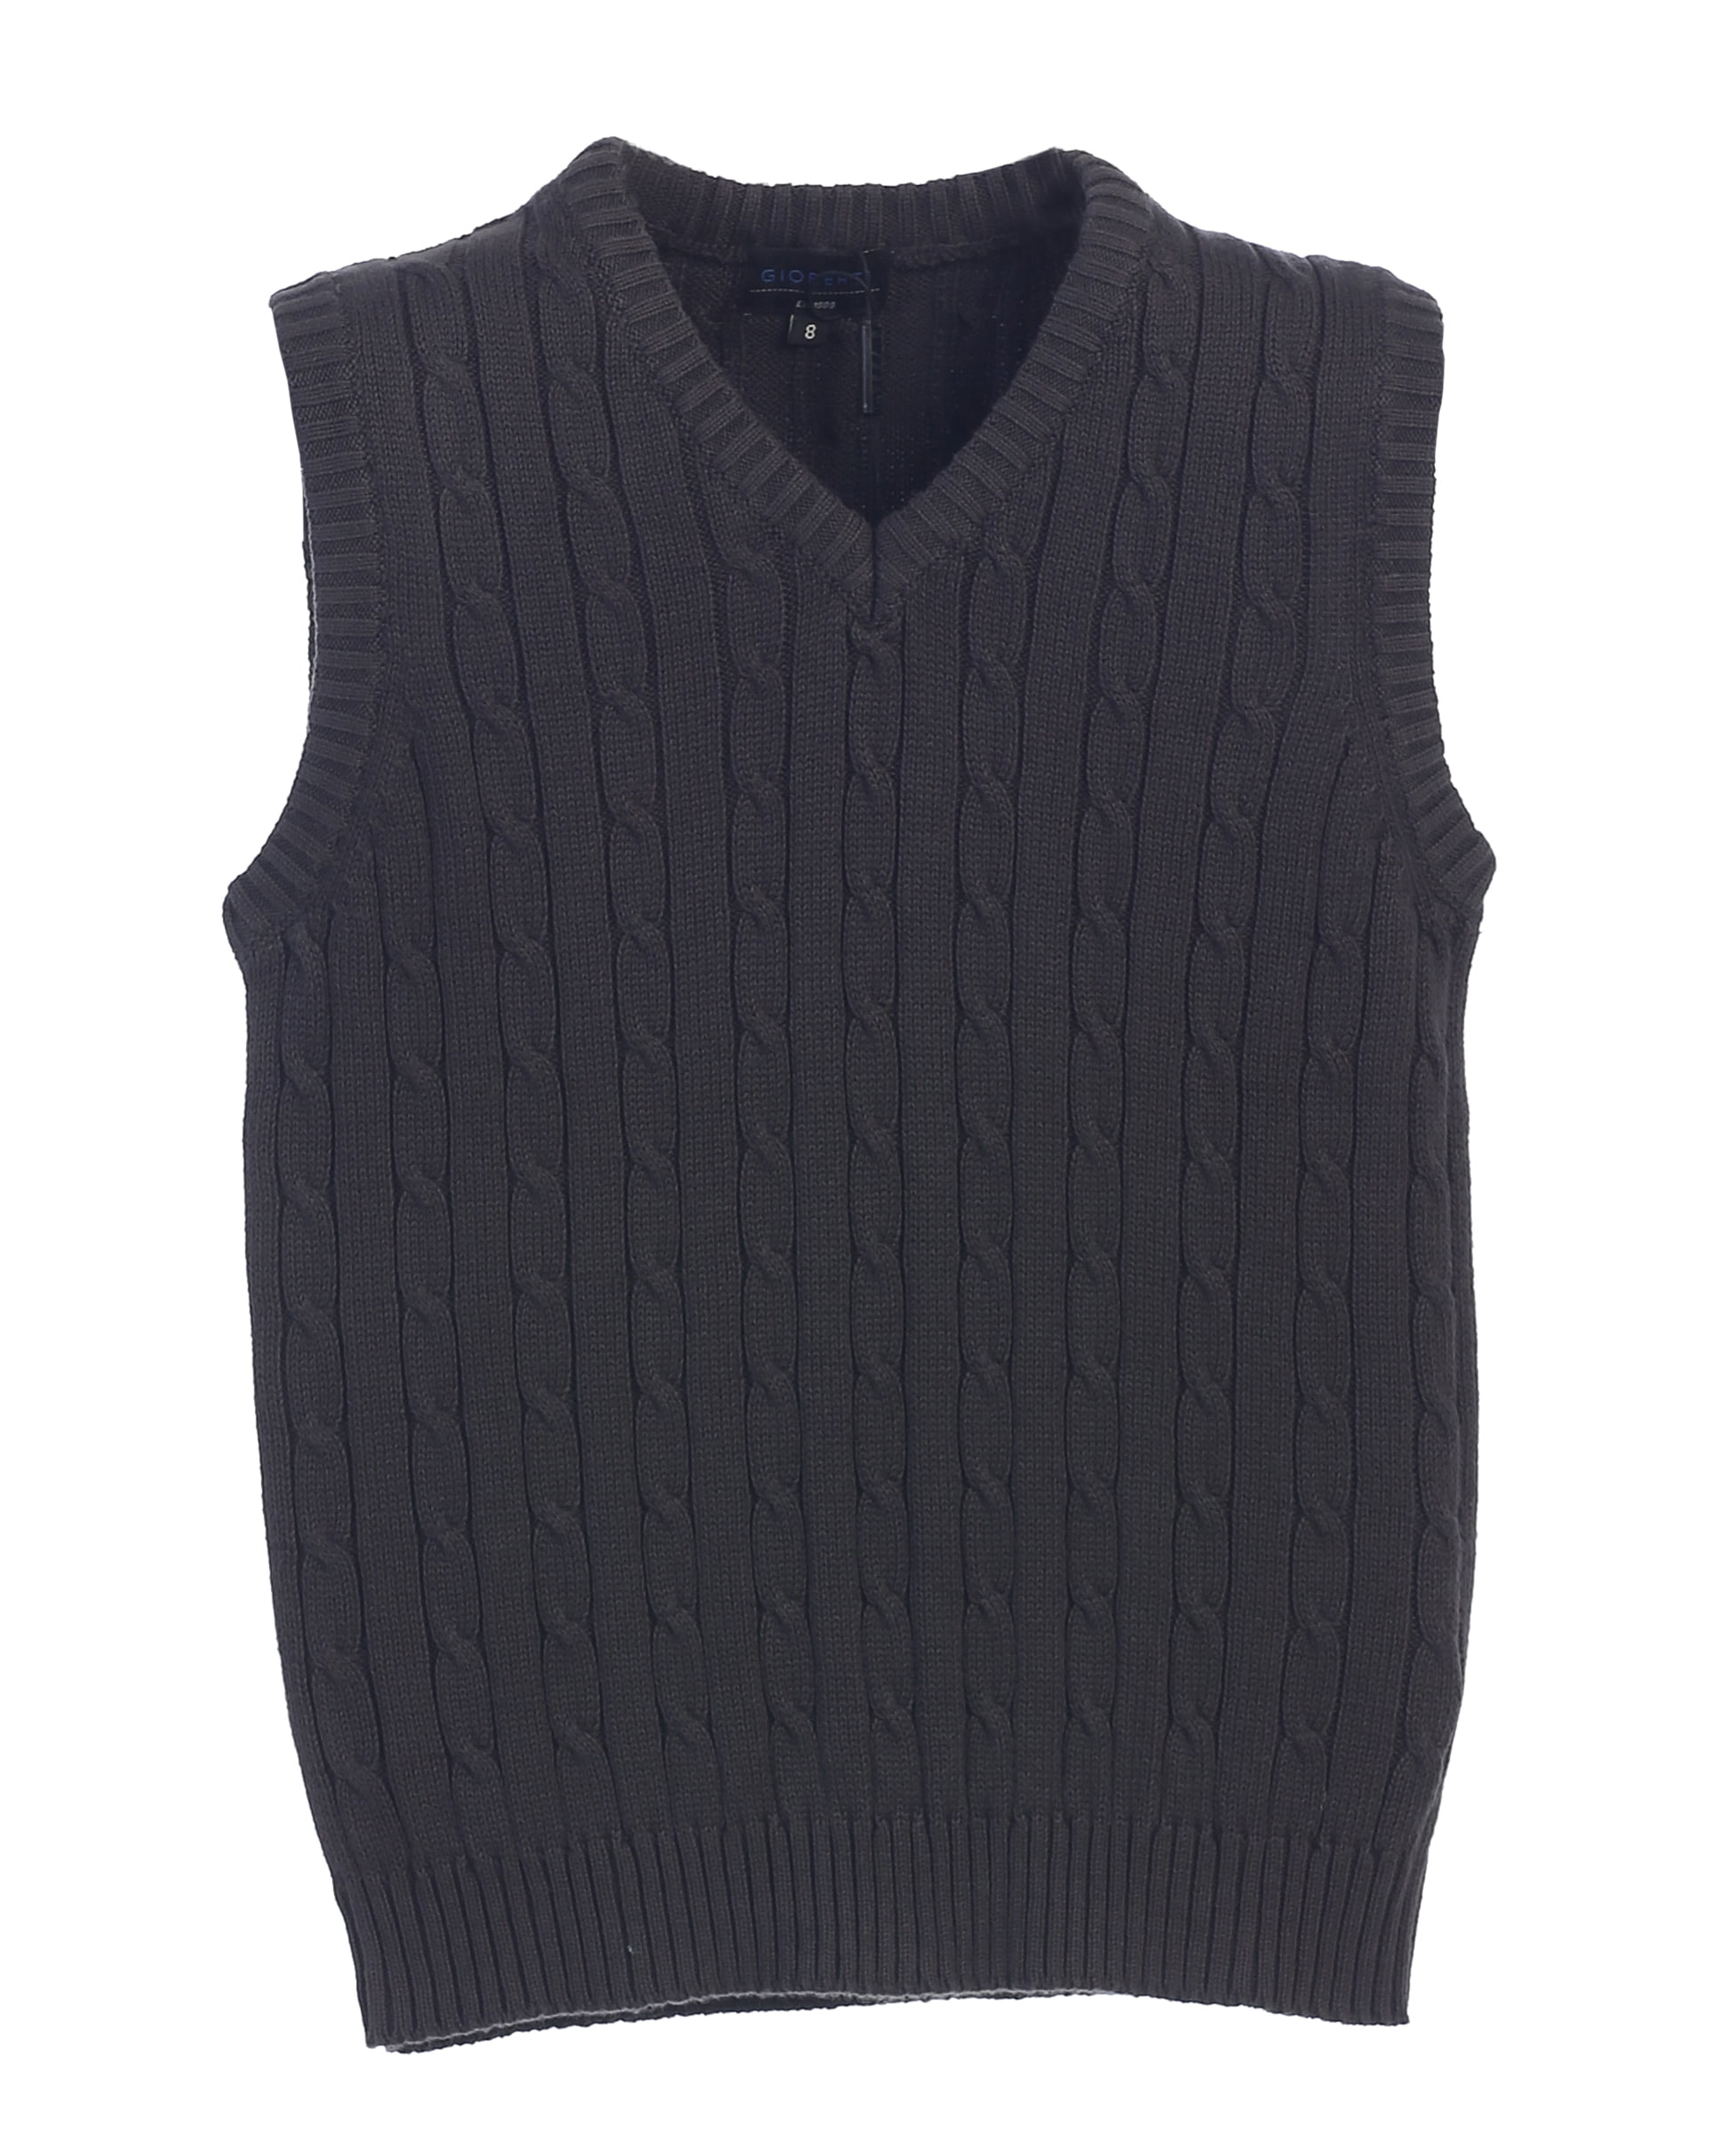 BOBOYOYO Boys Uniform Sweater Vest V-Neck Vests Twist Weave Cable Knit Sweater for Kids 5-12Y 